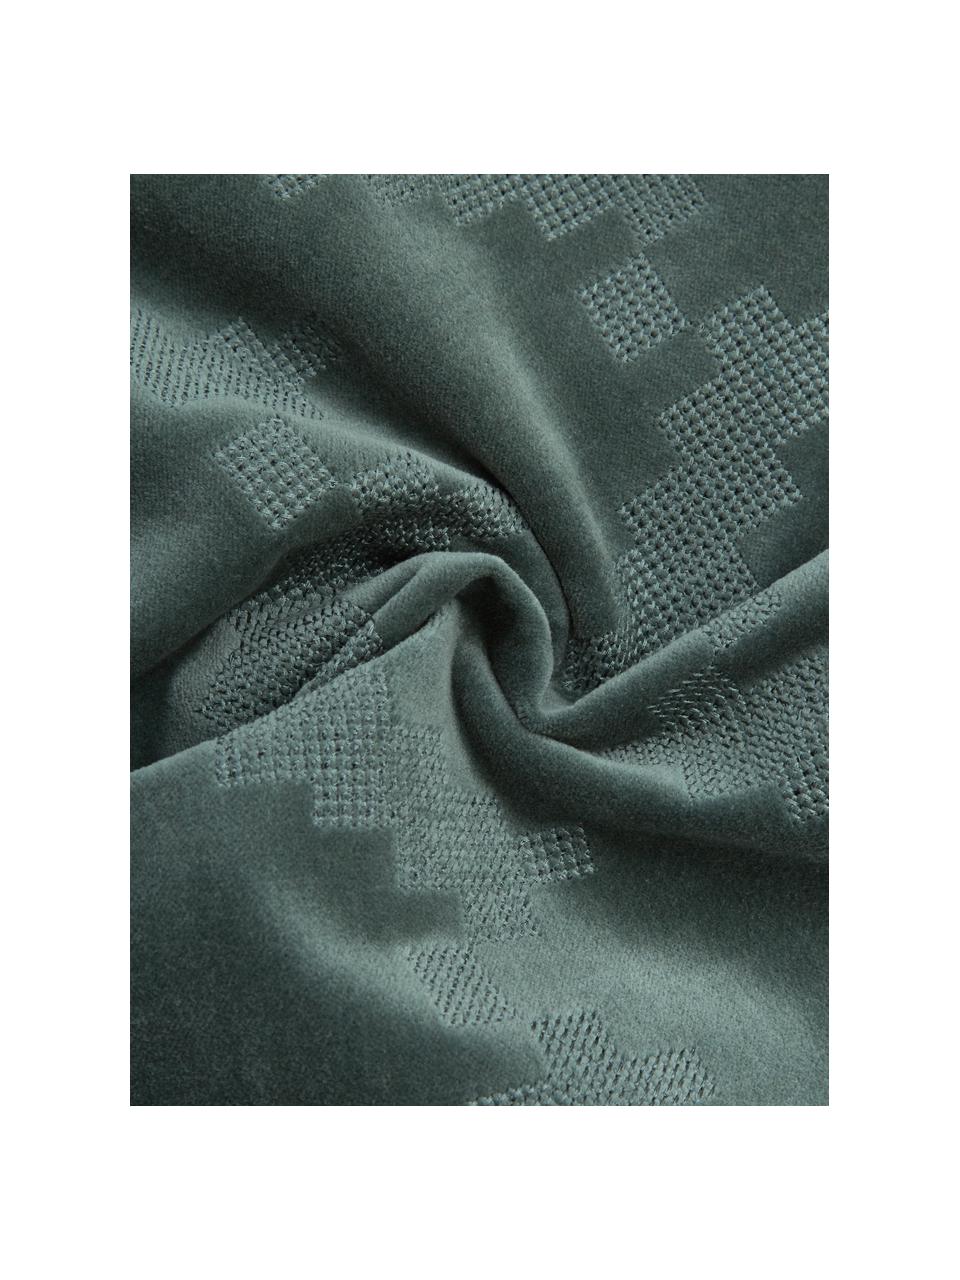 Samt-Kissen Twisted Brooklyn mit Strukturmuster in Blau-Grün, mit Inlett, Bezug: 100% Baumwollsamt, Blau-Grün, 45 x 45 cm